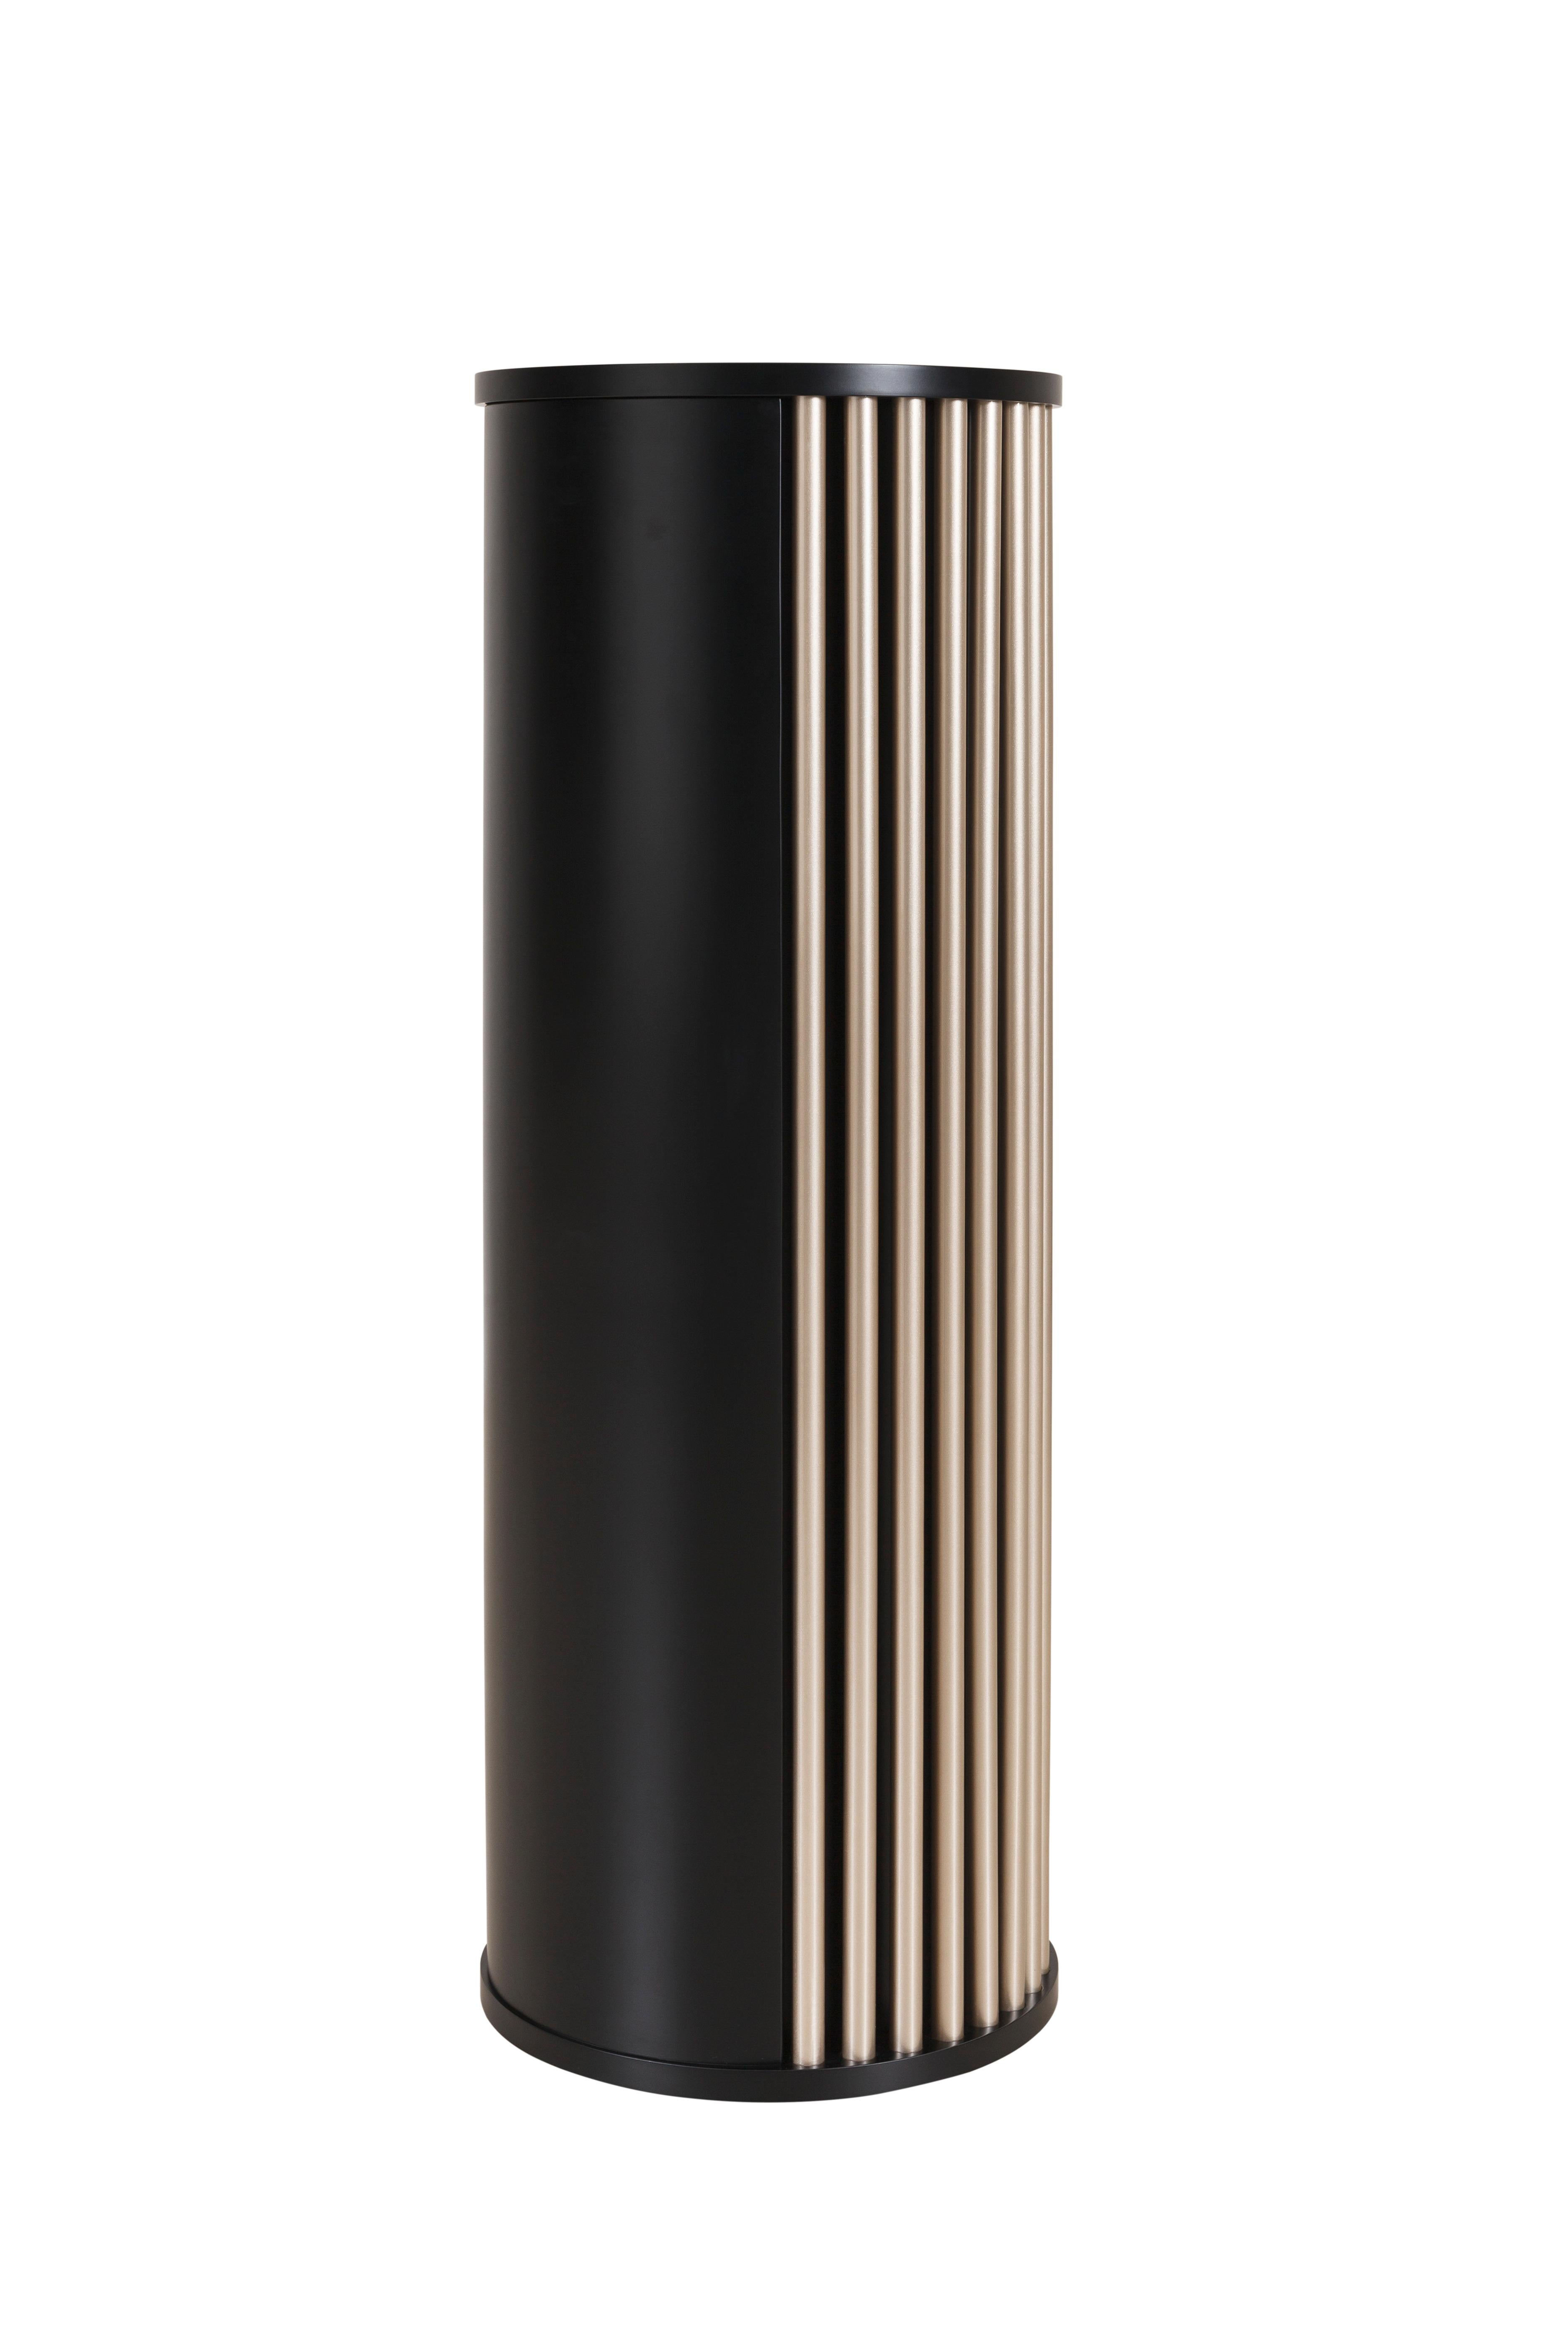 Modern Black Flute Pedestal Sculpture Column Handmade in Portugal by Greenapple For Sale 2